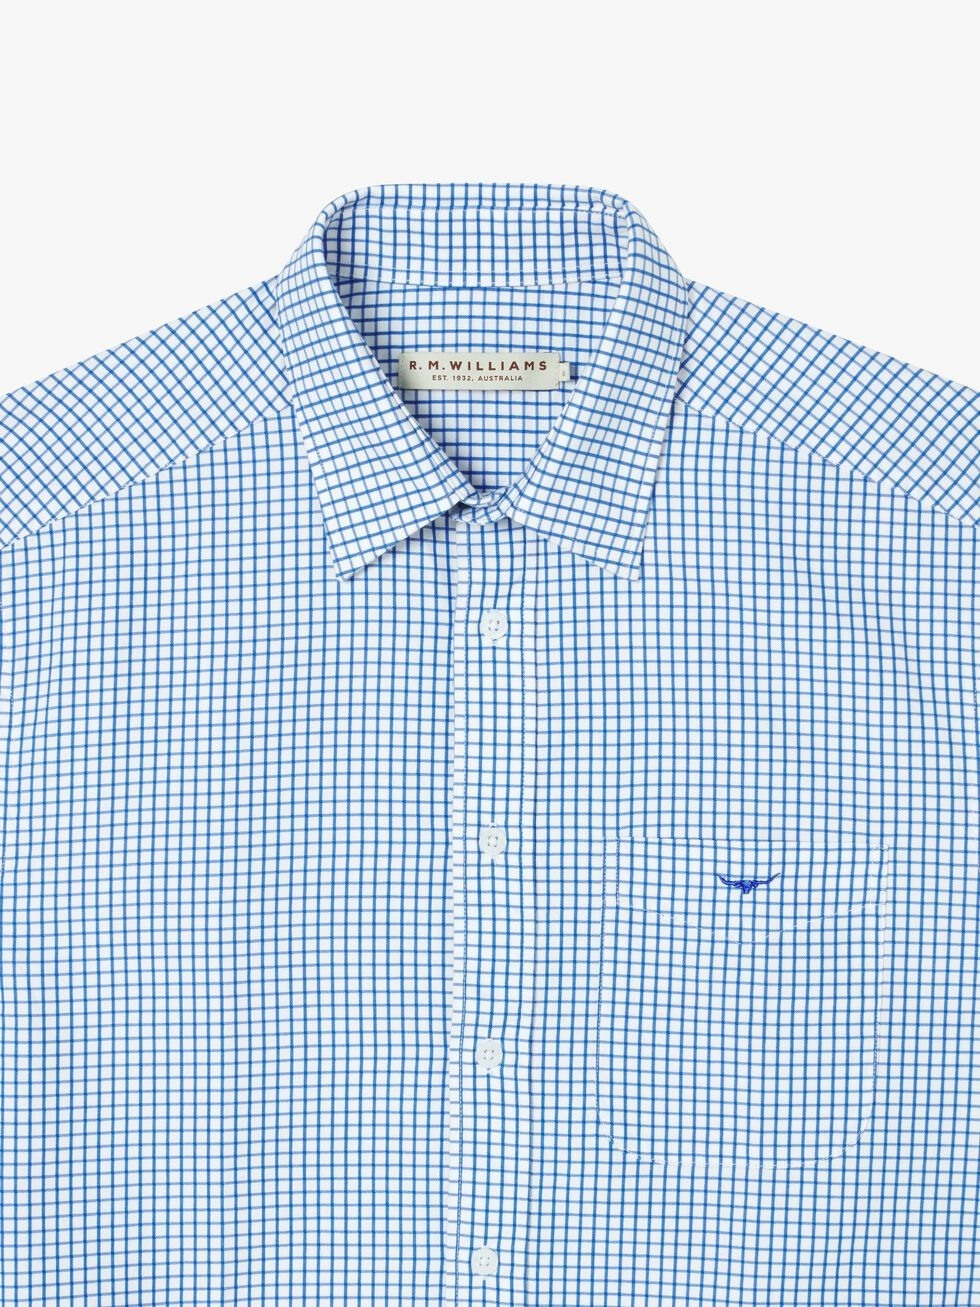 RM Williams Hervey Shirt - White/Blue Check | Port Phillip Shop